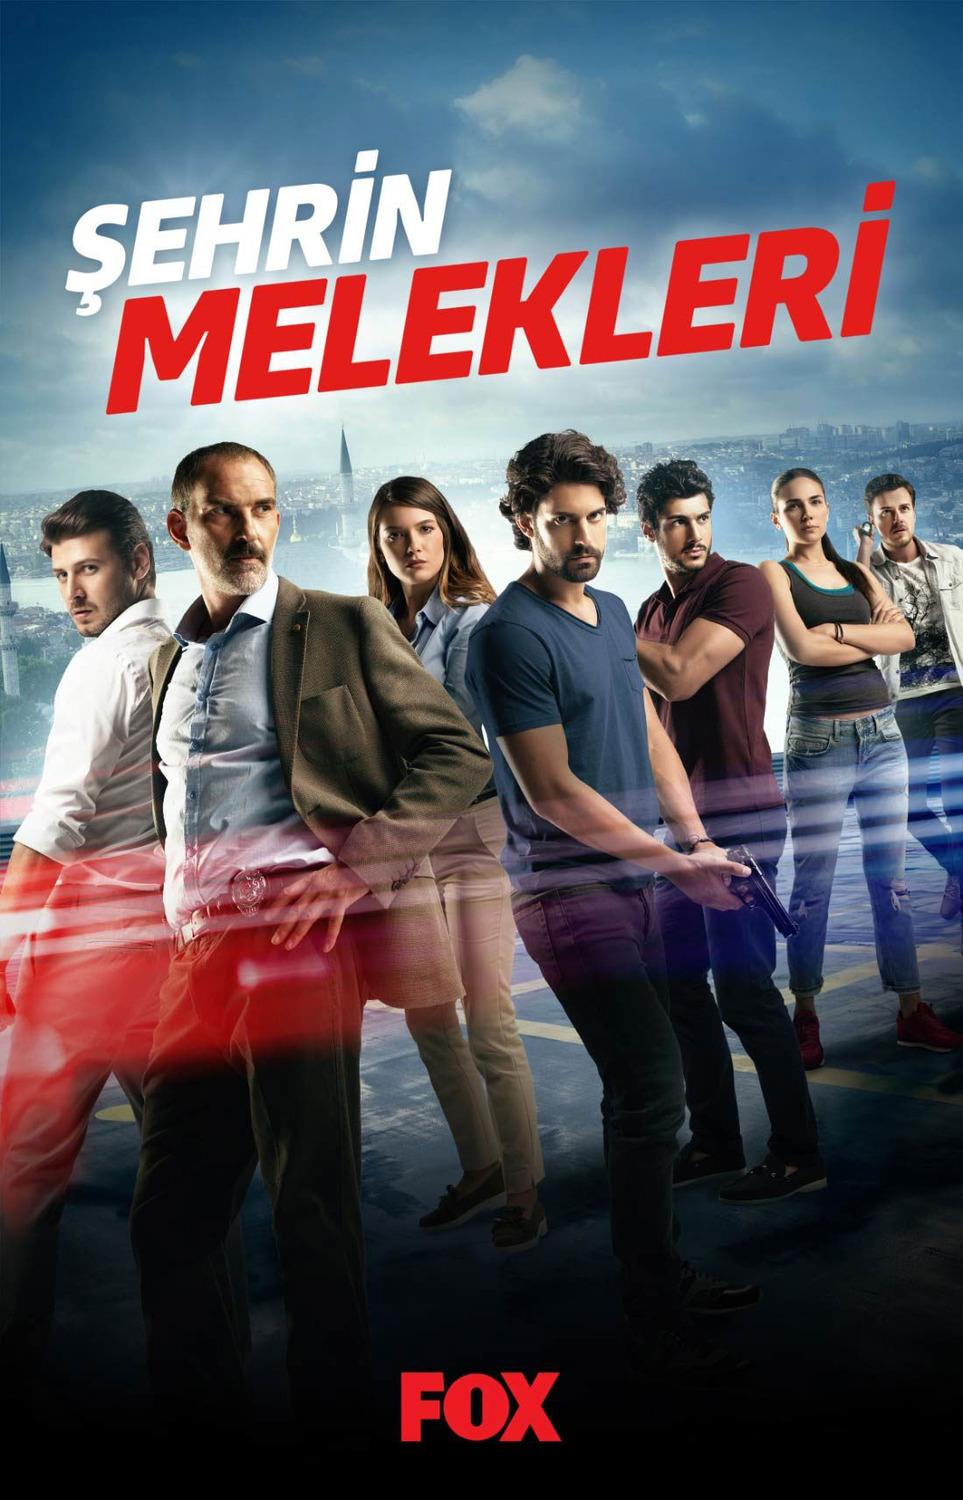 Extra Large TV Poster Image for Sehrin Melekleri (#2 of 3)